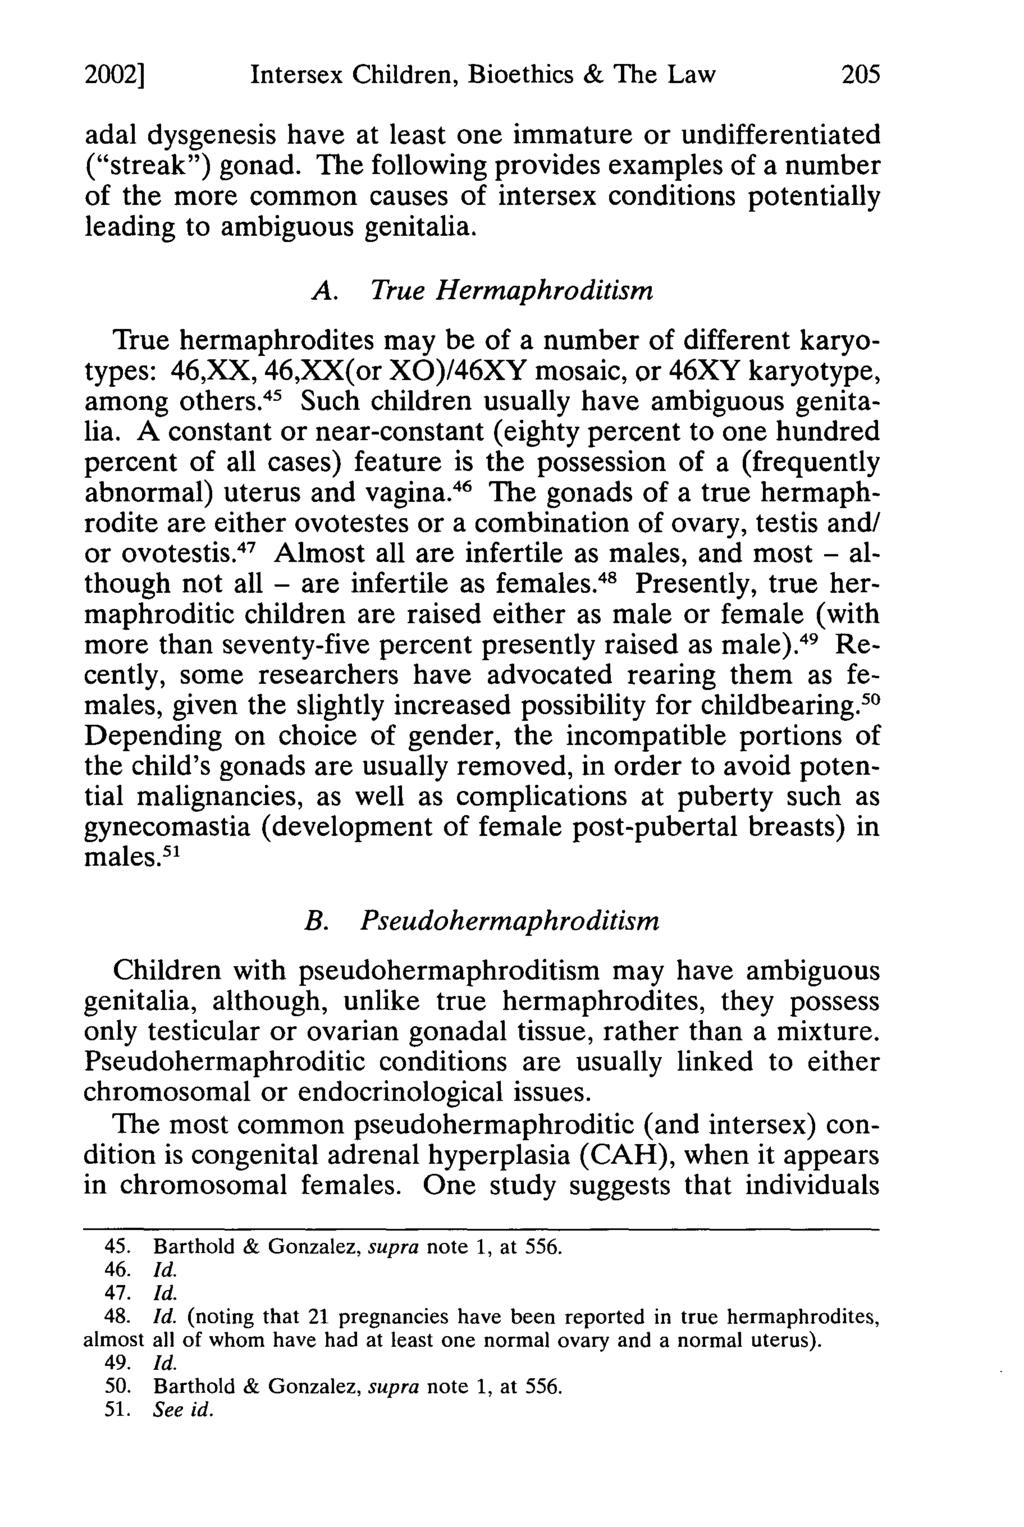 20021 Hermer: Paradigms Revised: Intersex Children, Bioethics & the Law Intersex Children, Bioethics & The Law adal dysgenesis have at least one immature or undifferentiated ("streak") gonad.